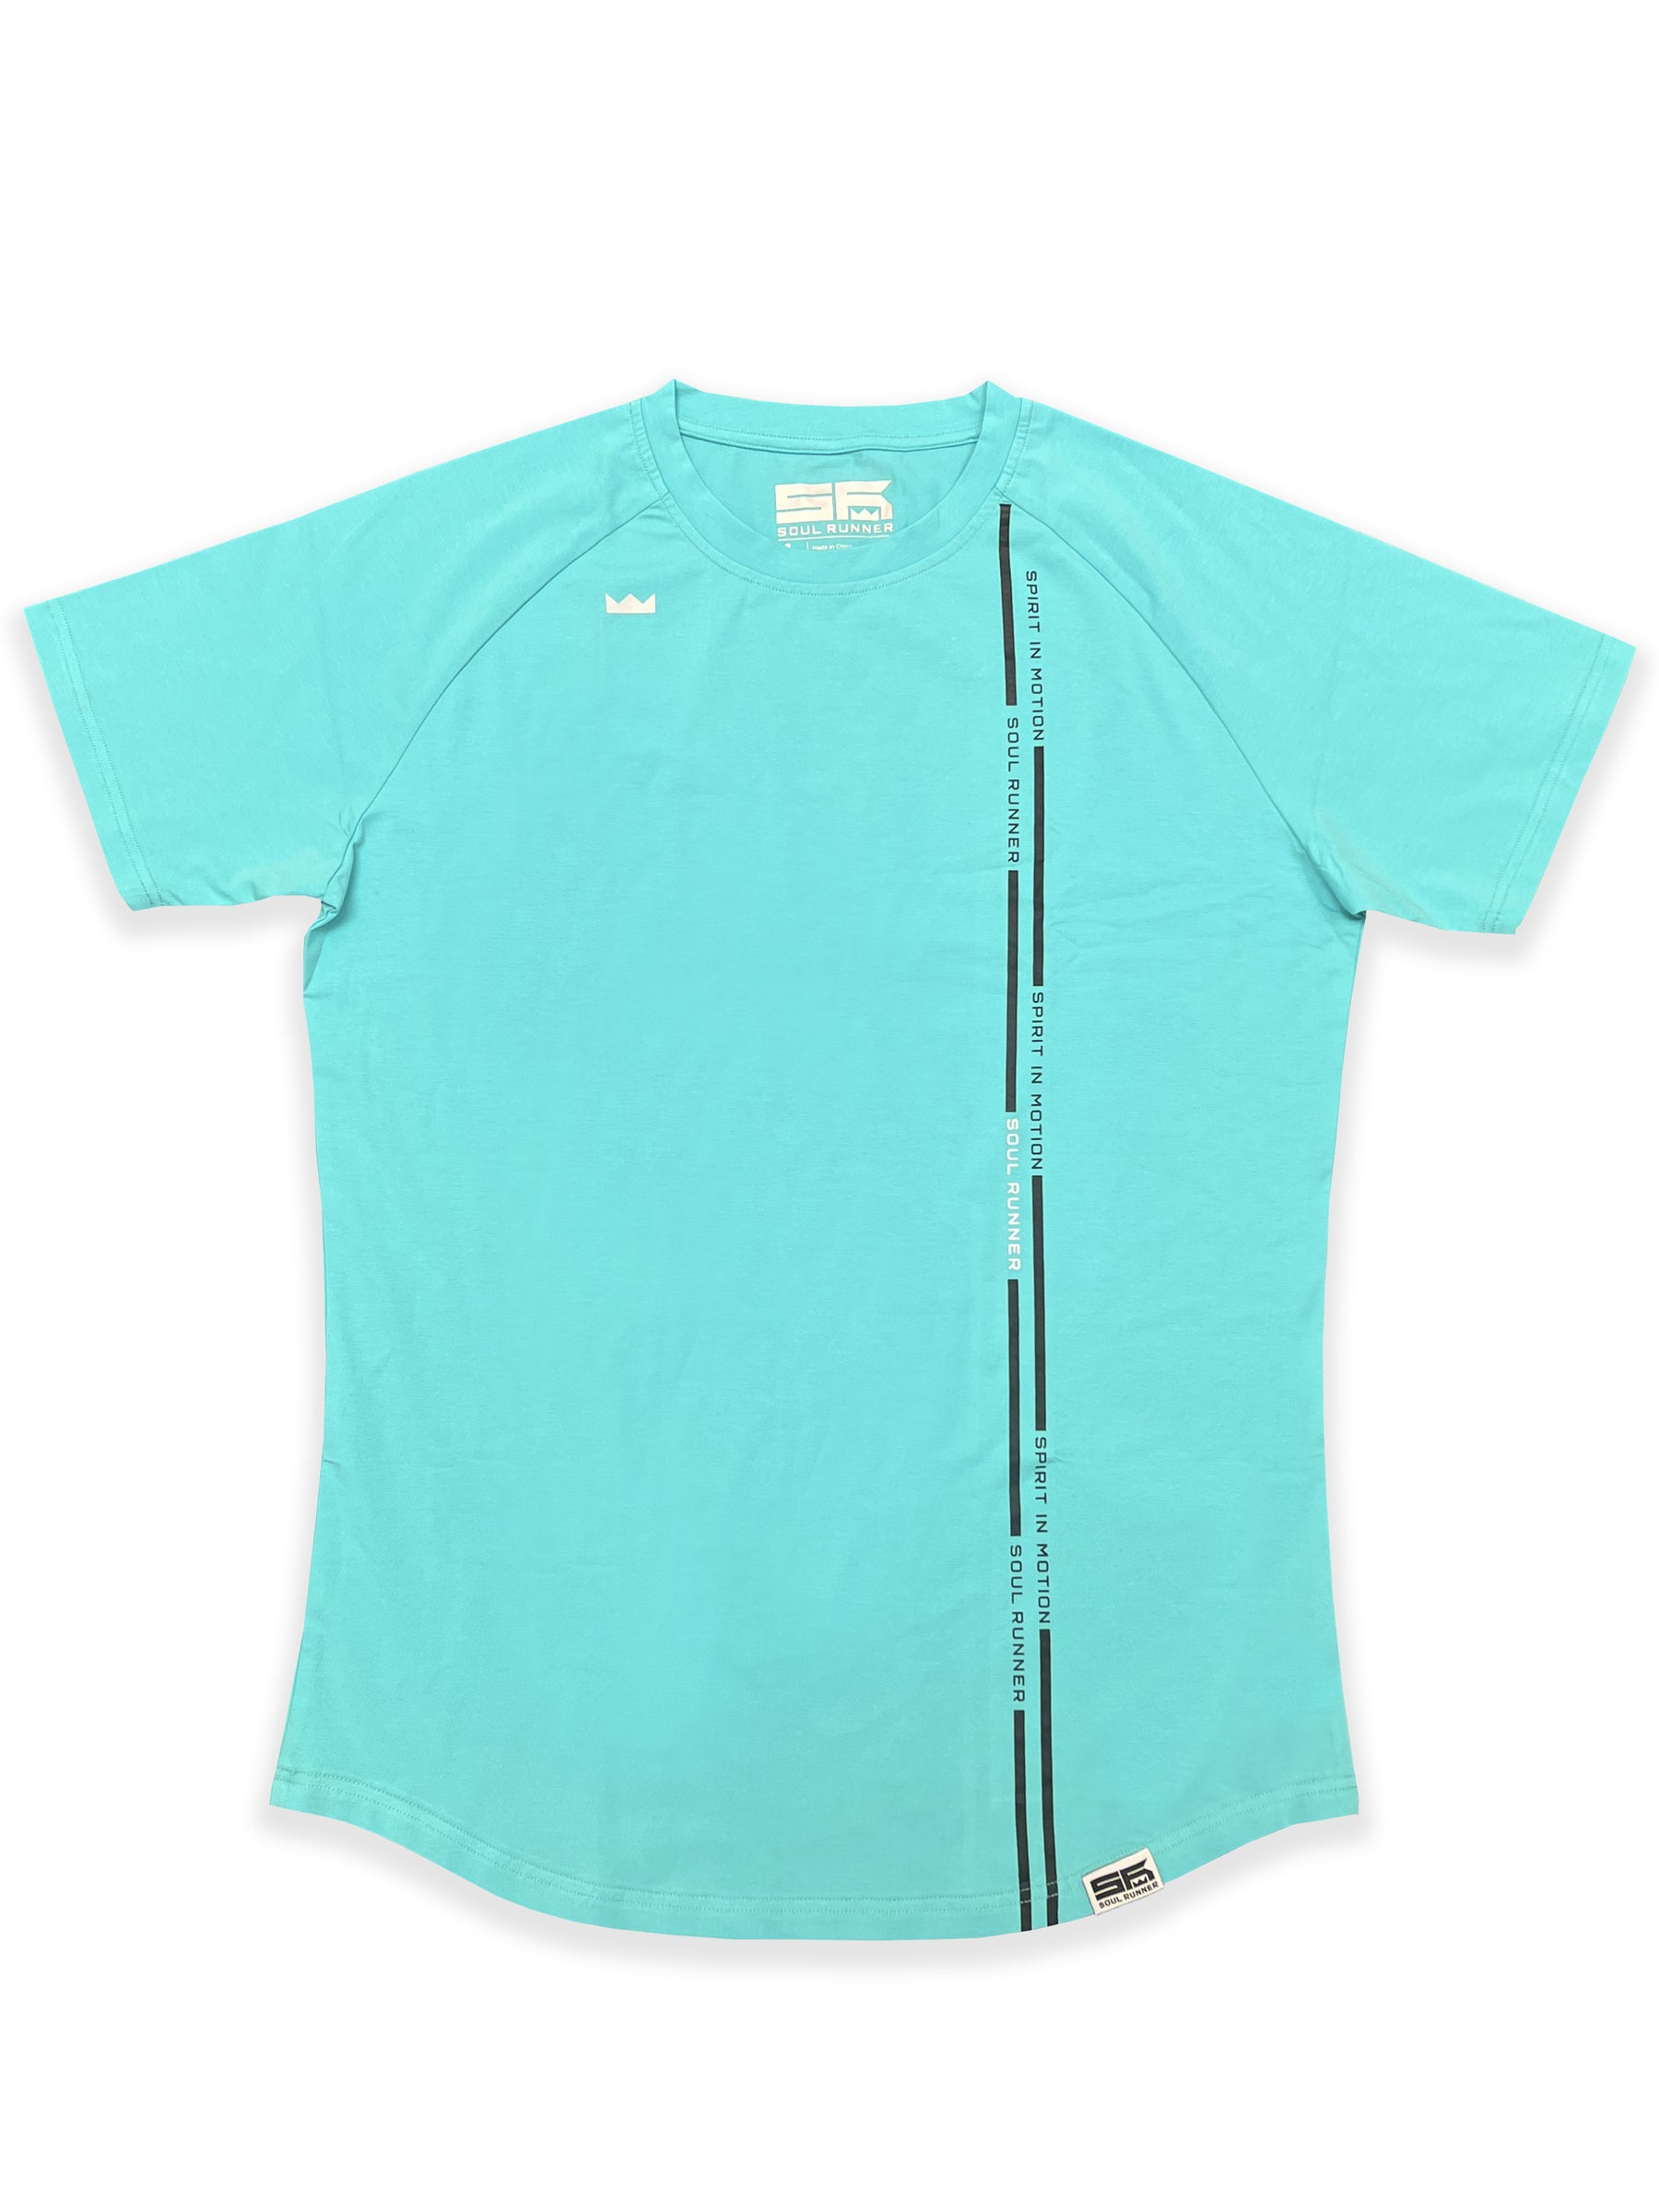 Turquoise Athletic T-Shirt - Tyreek Hill - Soul Runner